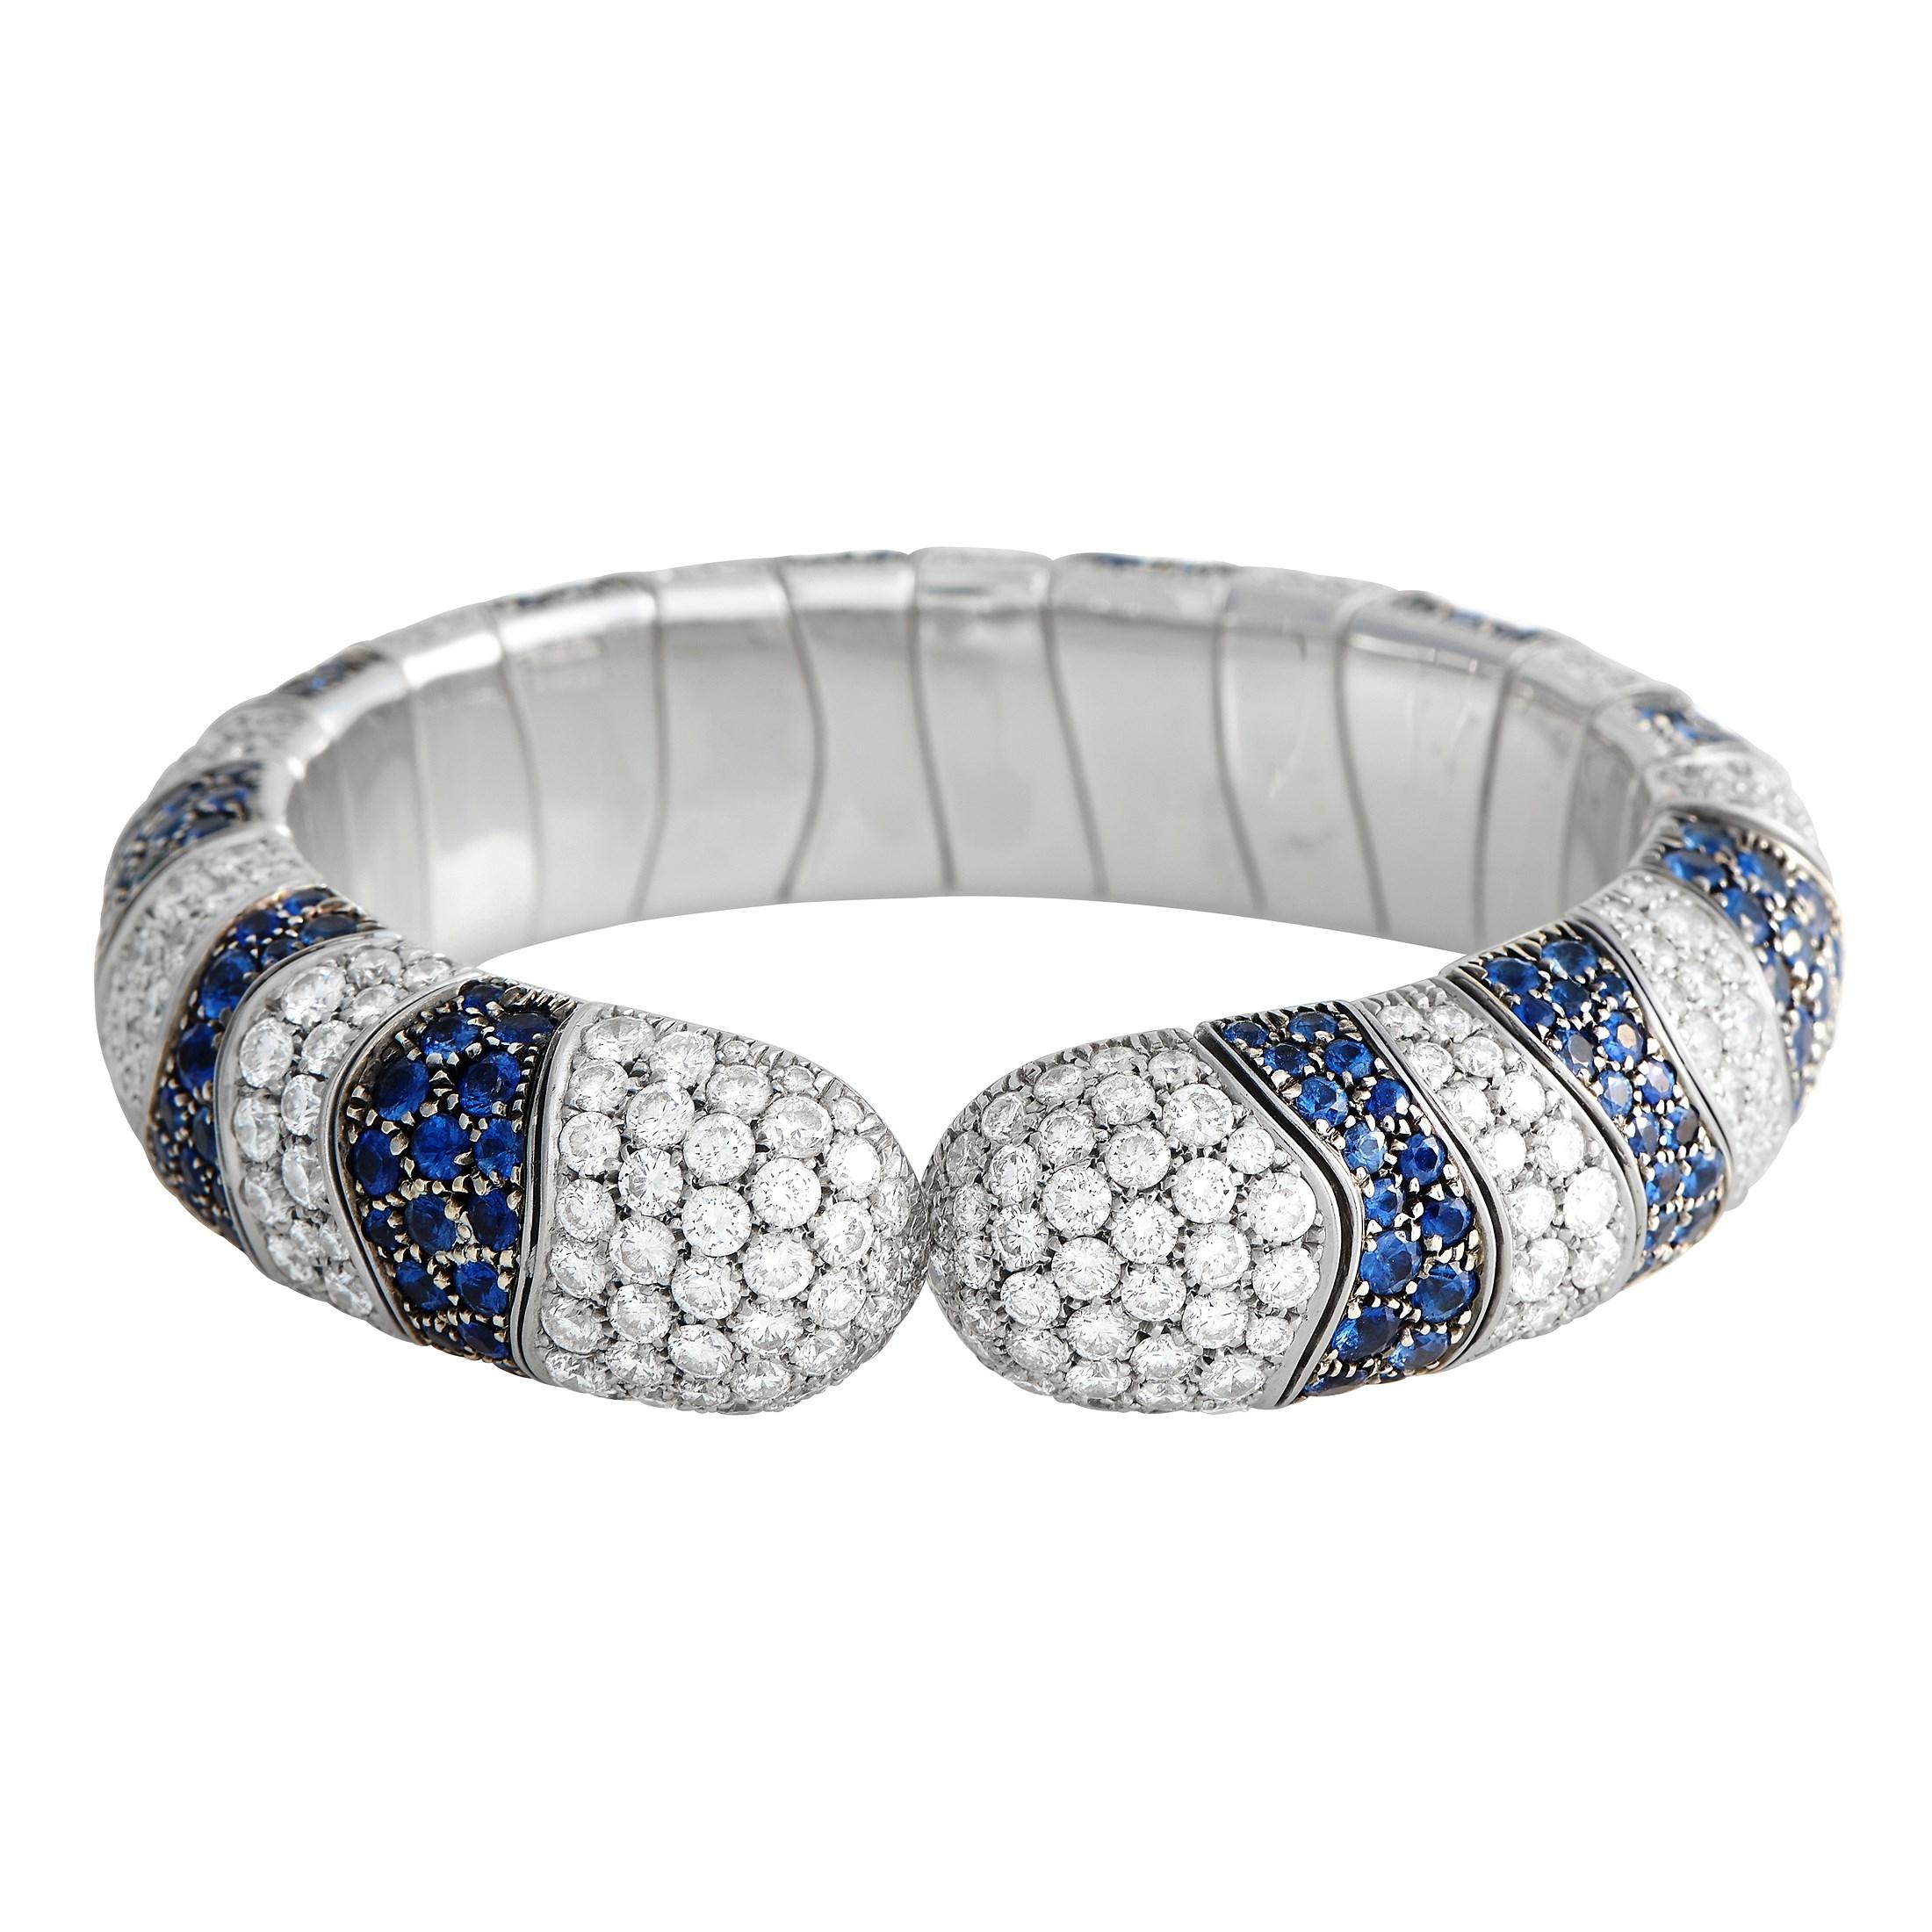 Round Cut de Grisogono 18K White Gold 13.5 ct Diamond and Blue Sapphire Bracelet